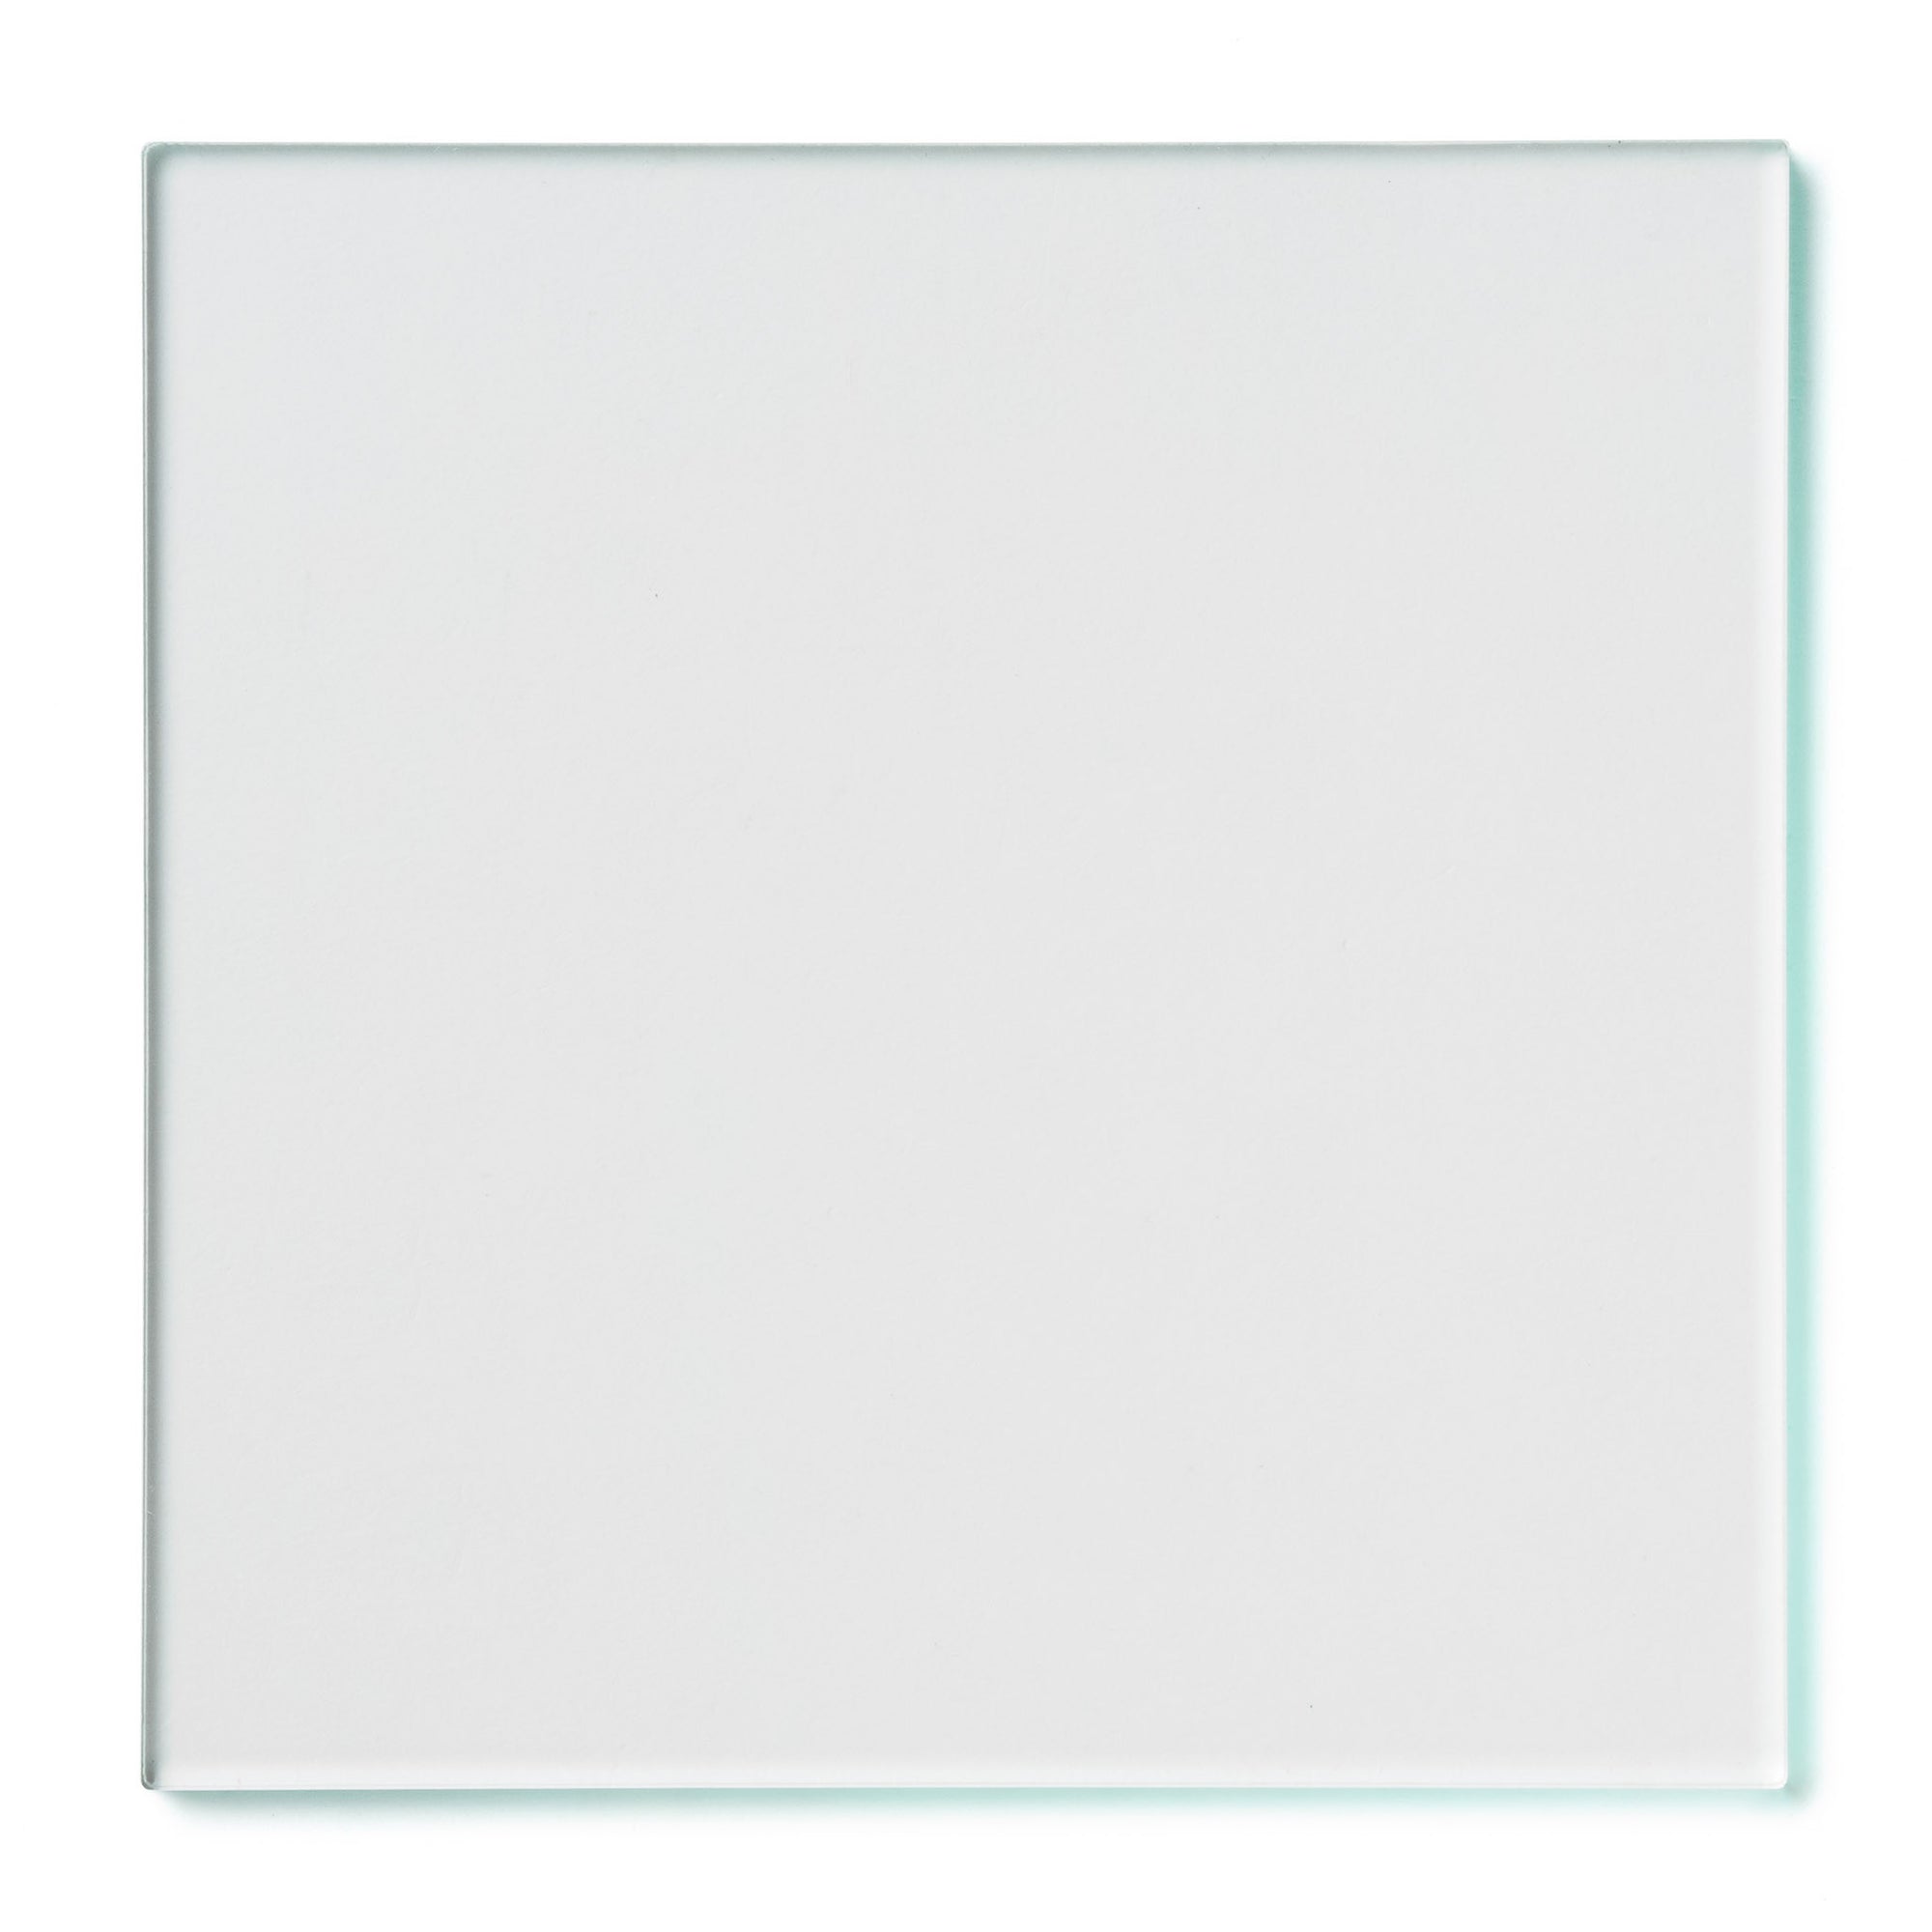 Green Edge Acrylic Plexiglass Sheet, Swatch view